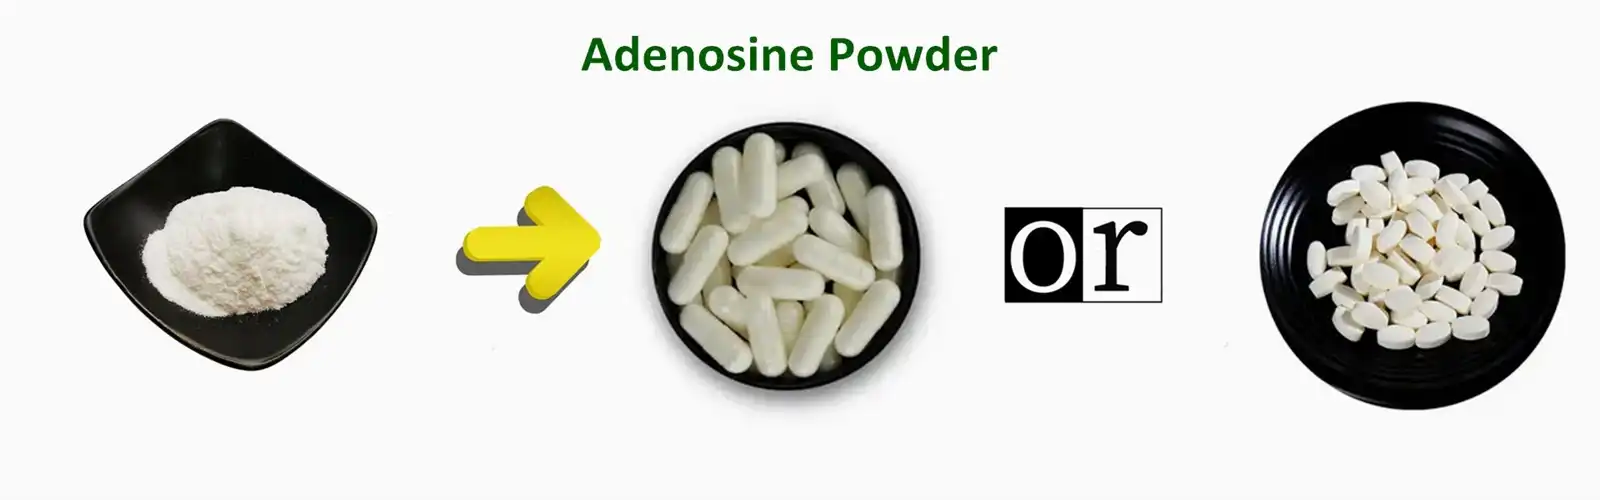 Adenosine Powder